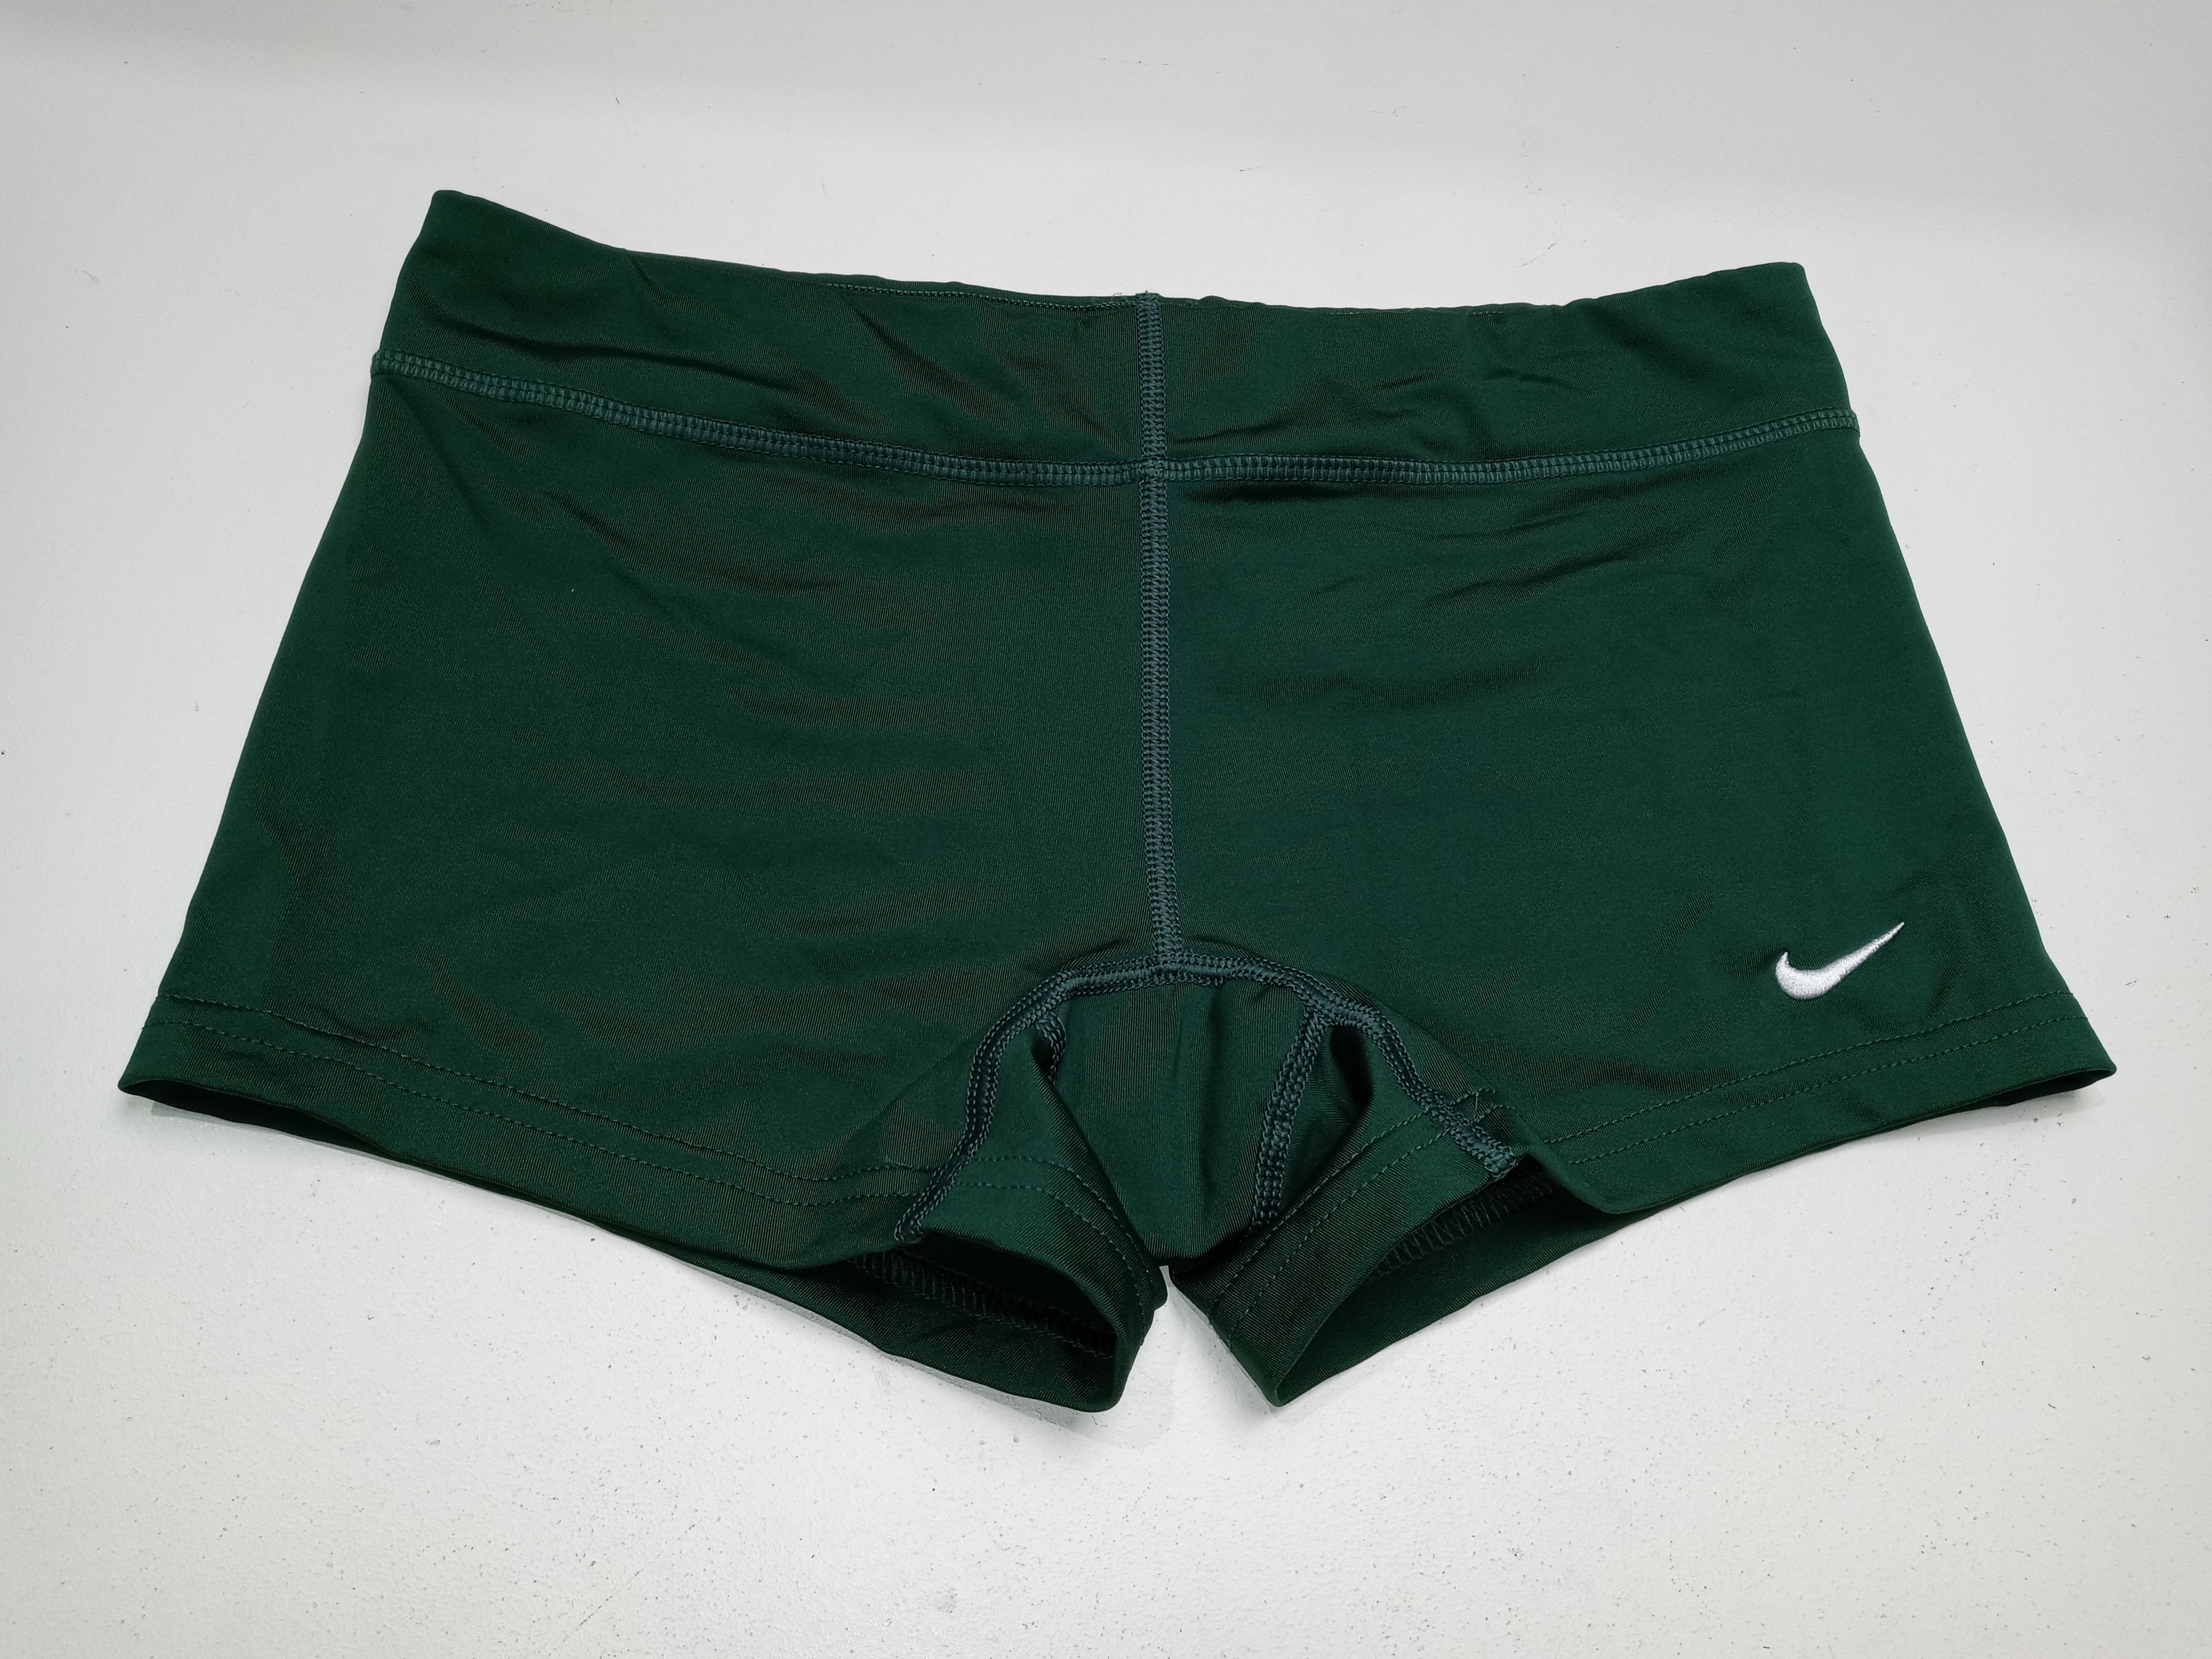 Nike Performance Women's Volleyball Game Shorts (Medium, Gorge Green)